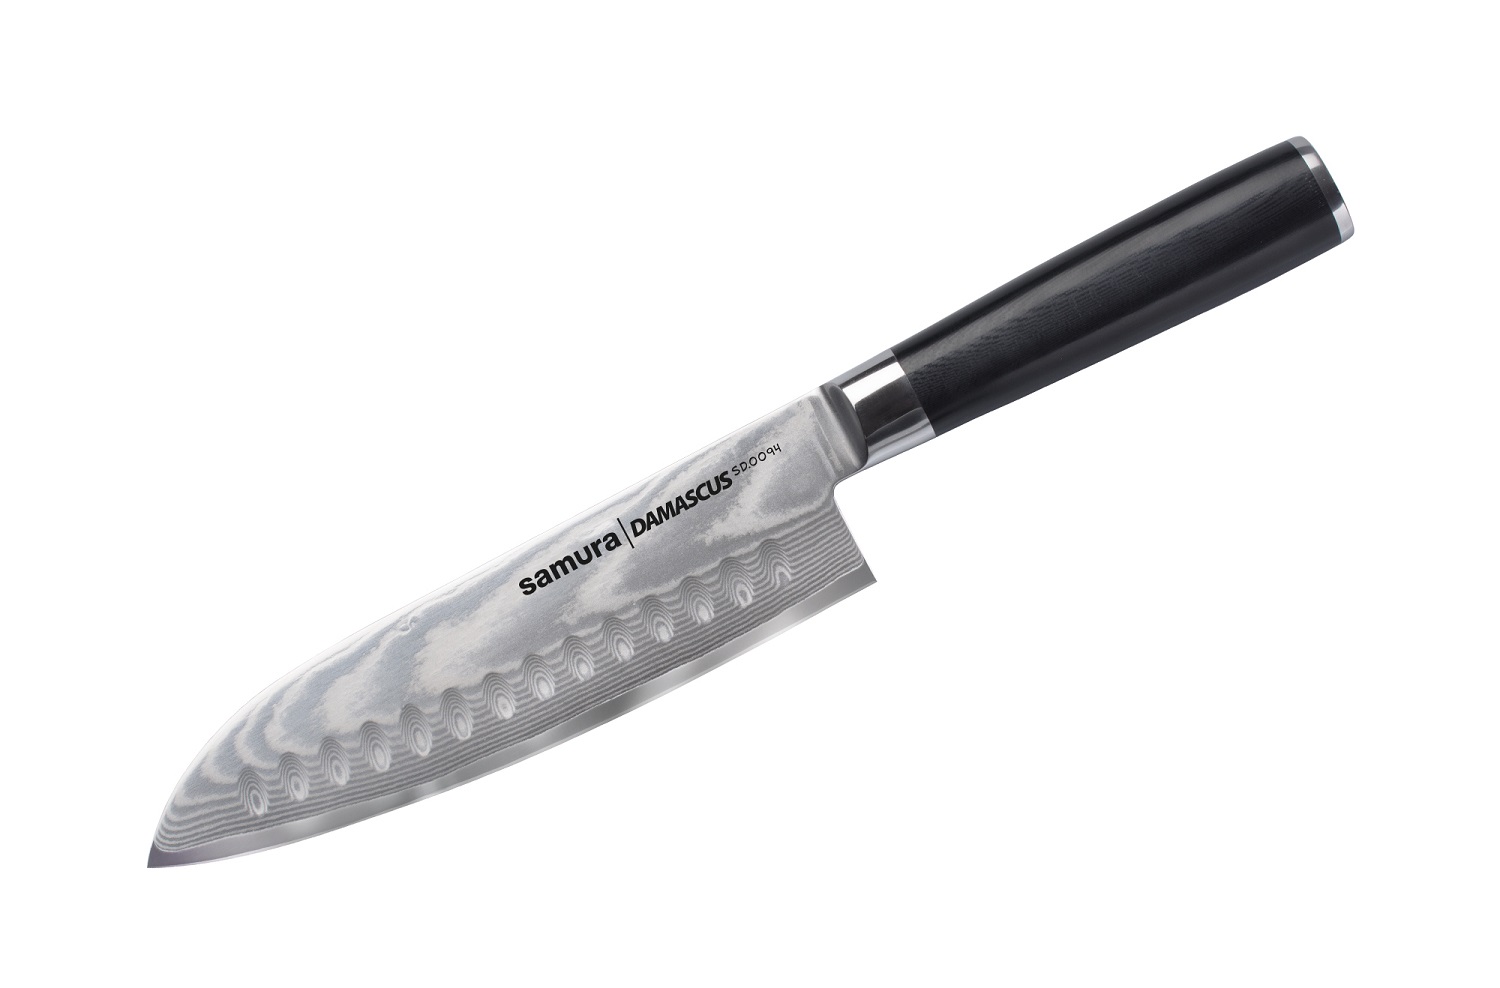 Нож Samura сантоку Damascus, 18 см, G-10, дамаск 67 слоев нож samura сантоку damascus 18 см g 10 дамаск 67 слоев